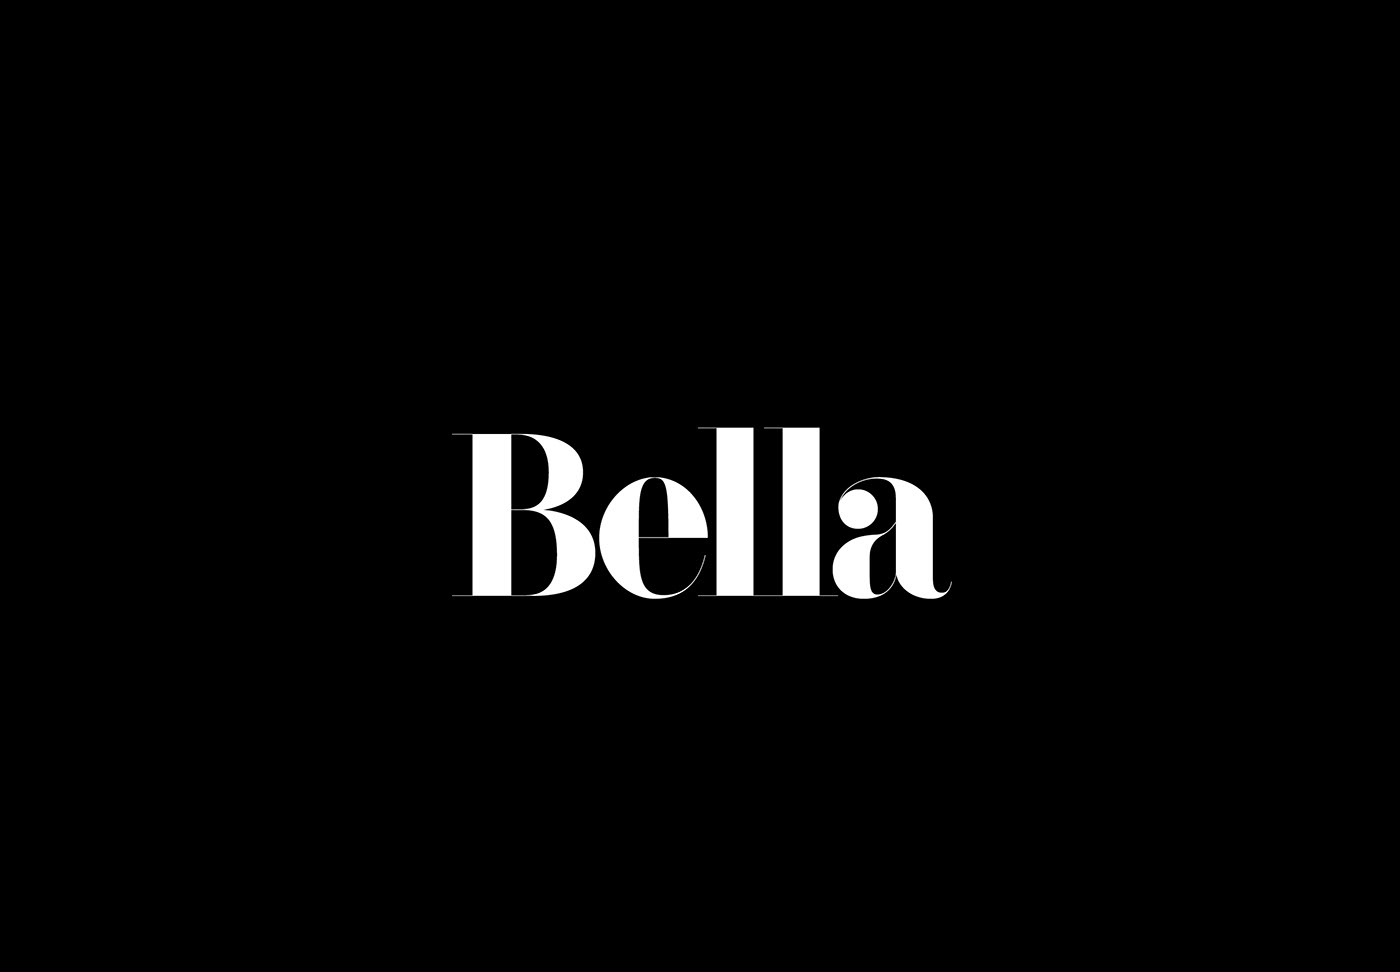 F37 Bella Bella Face37 Rick Banks F37FOUNDRY F37 FONT jan tschichold hairline hairlinefont serif